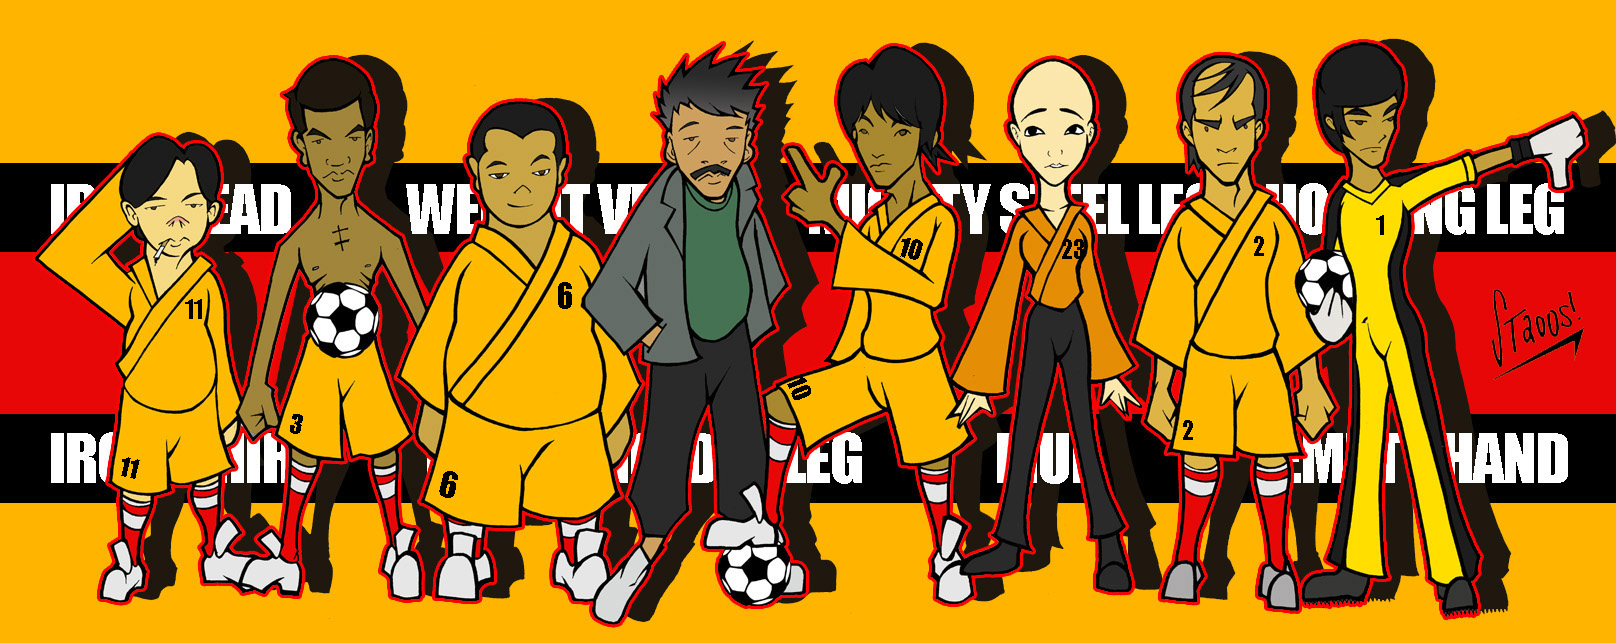 Shaolin Soccer by chinaguy16 on DeviantArt